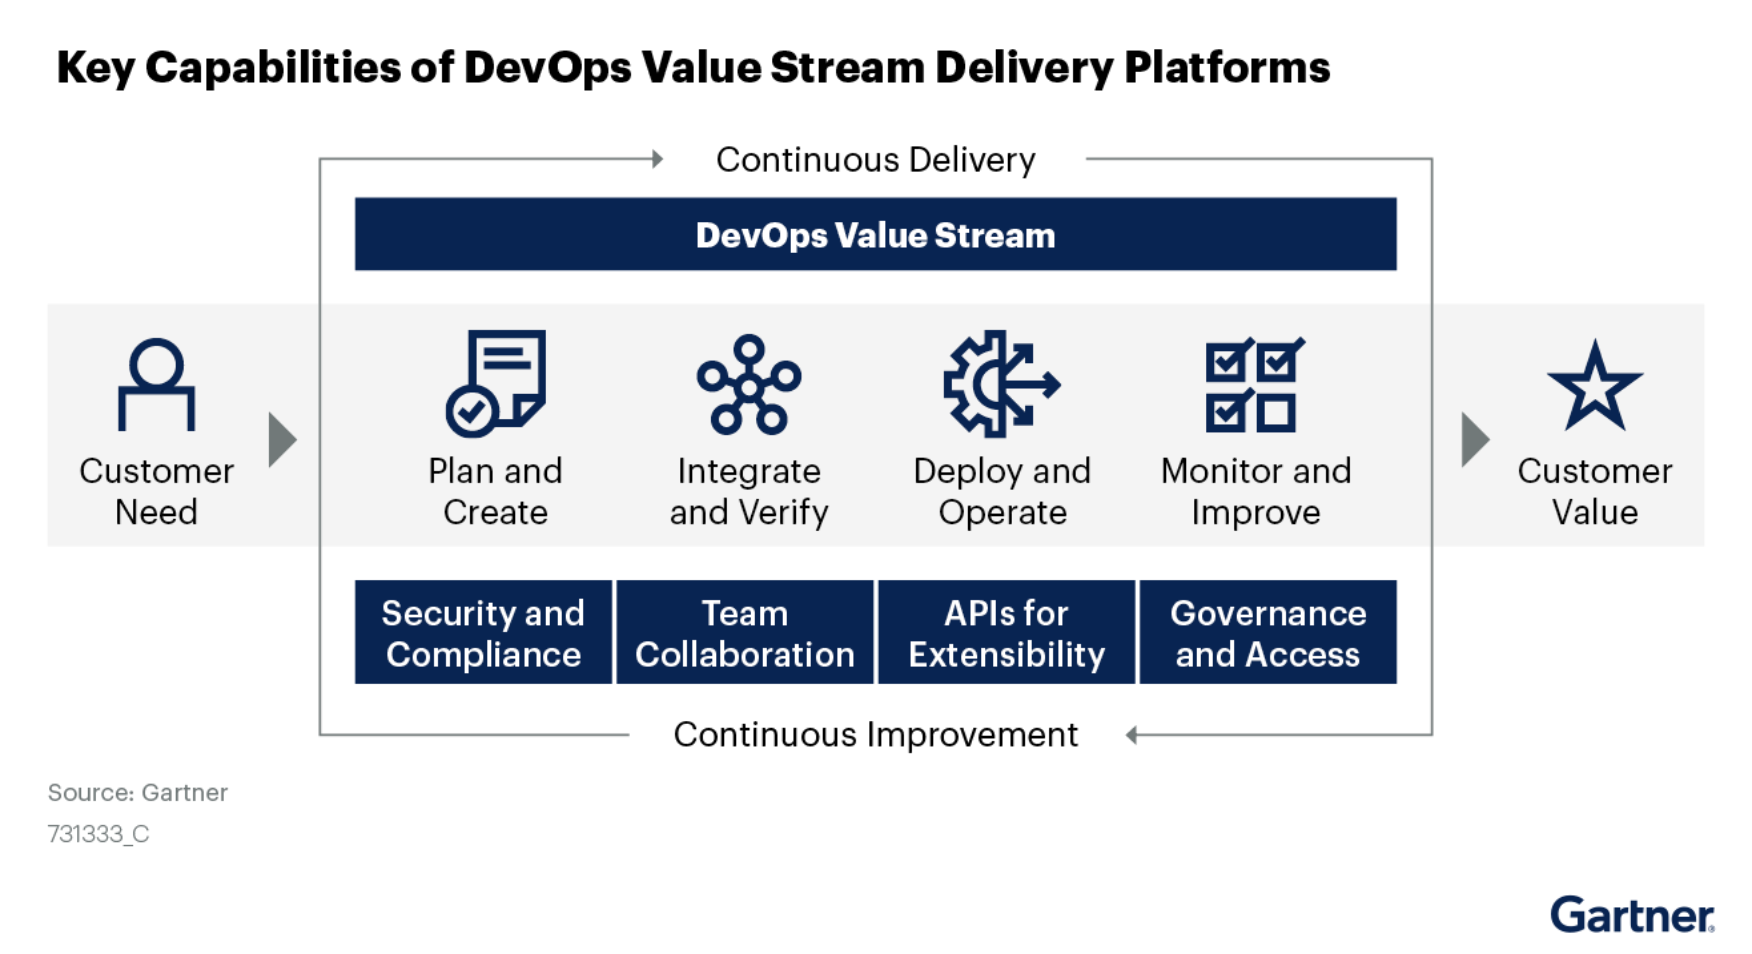 DevOps Value Stream Delivery